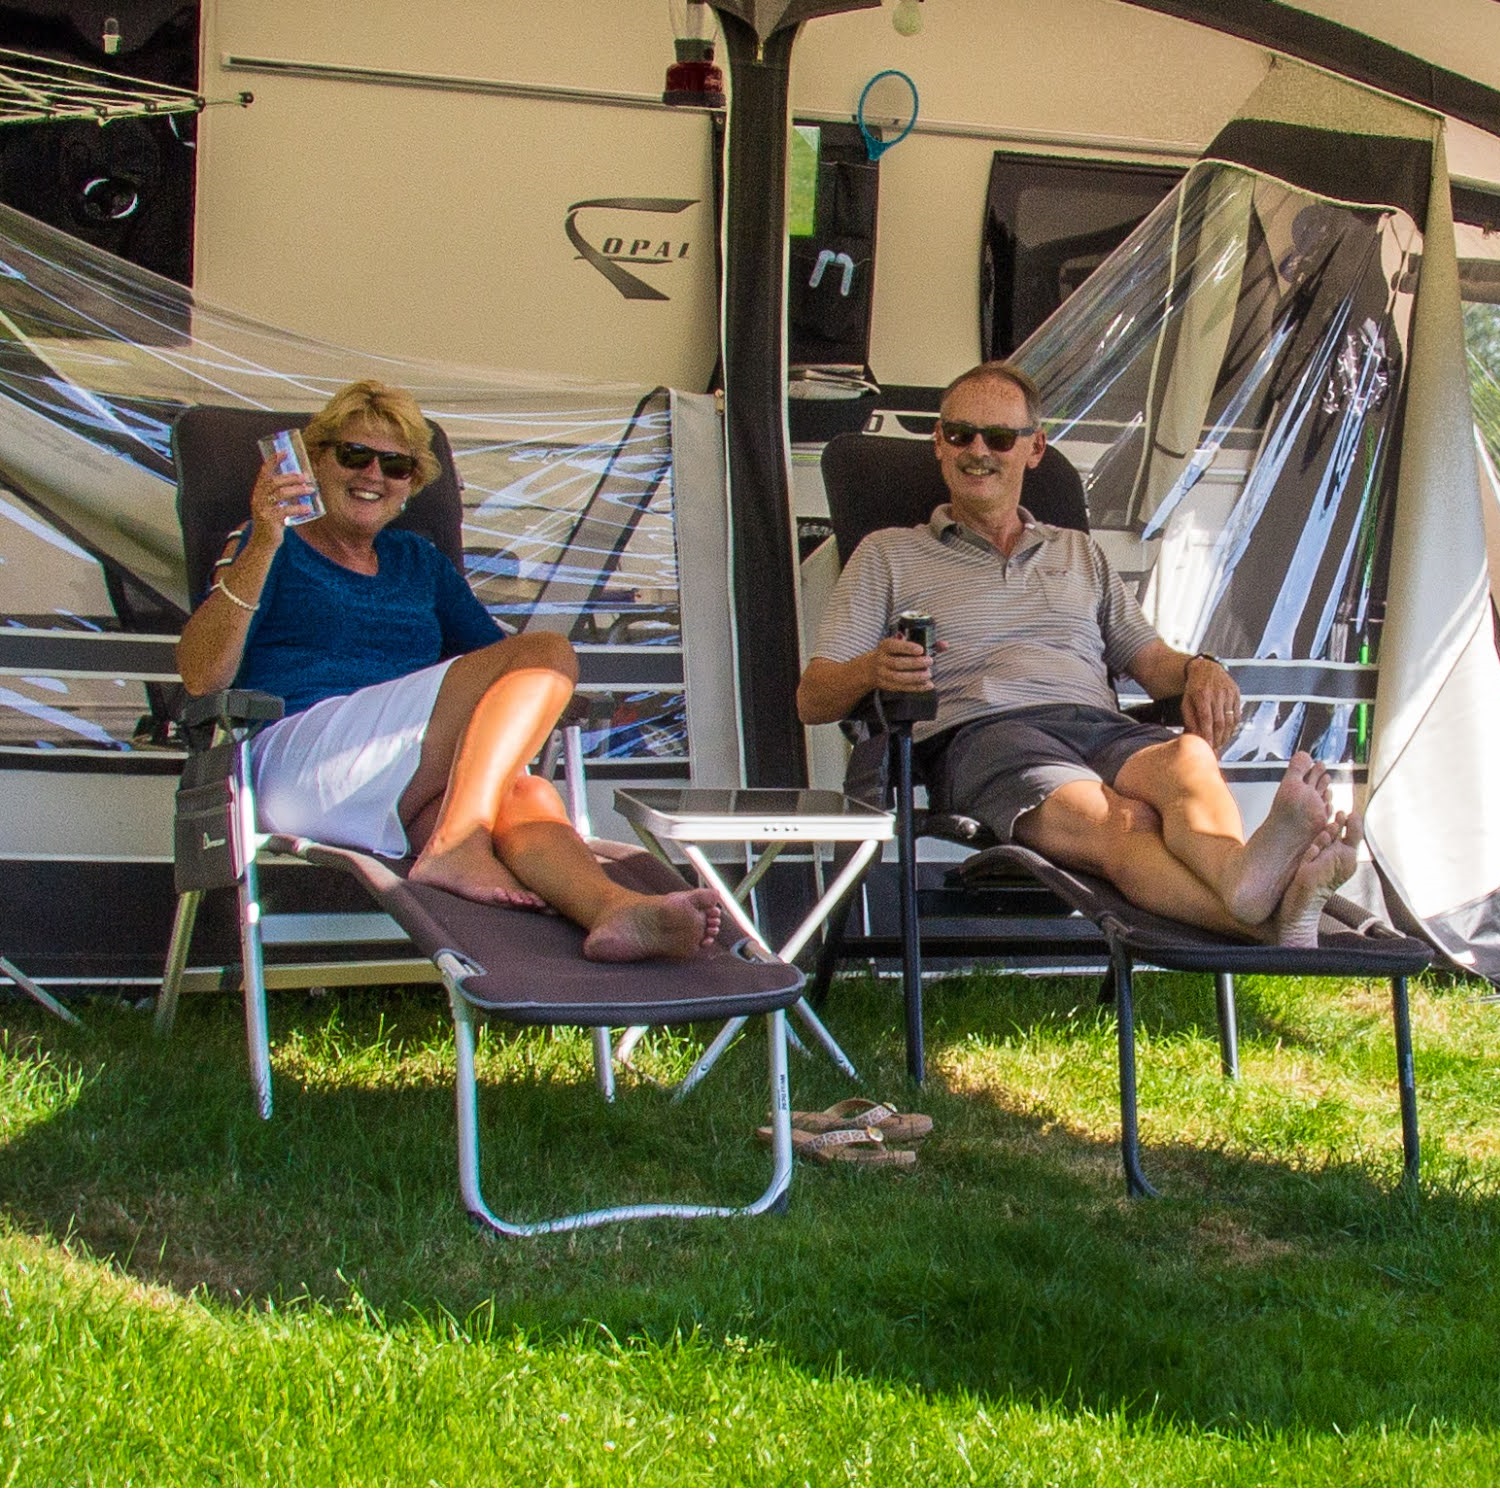 Prijswinnende camping charmecampingvan het jaar De Drie Provinciën